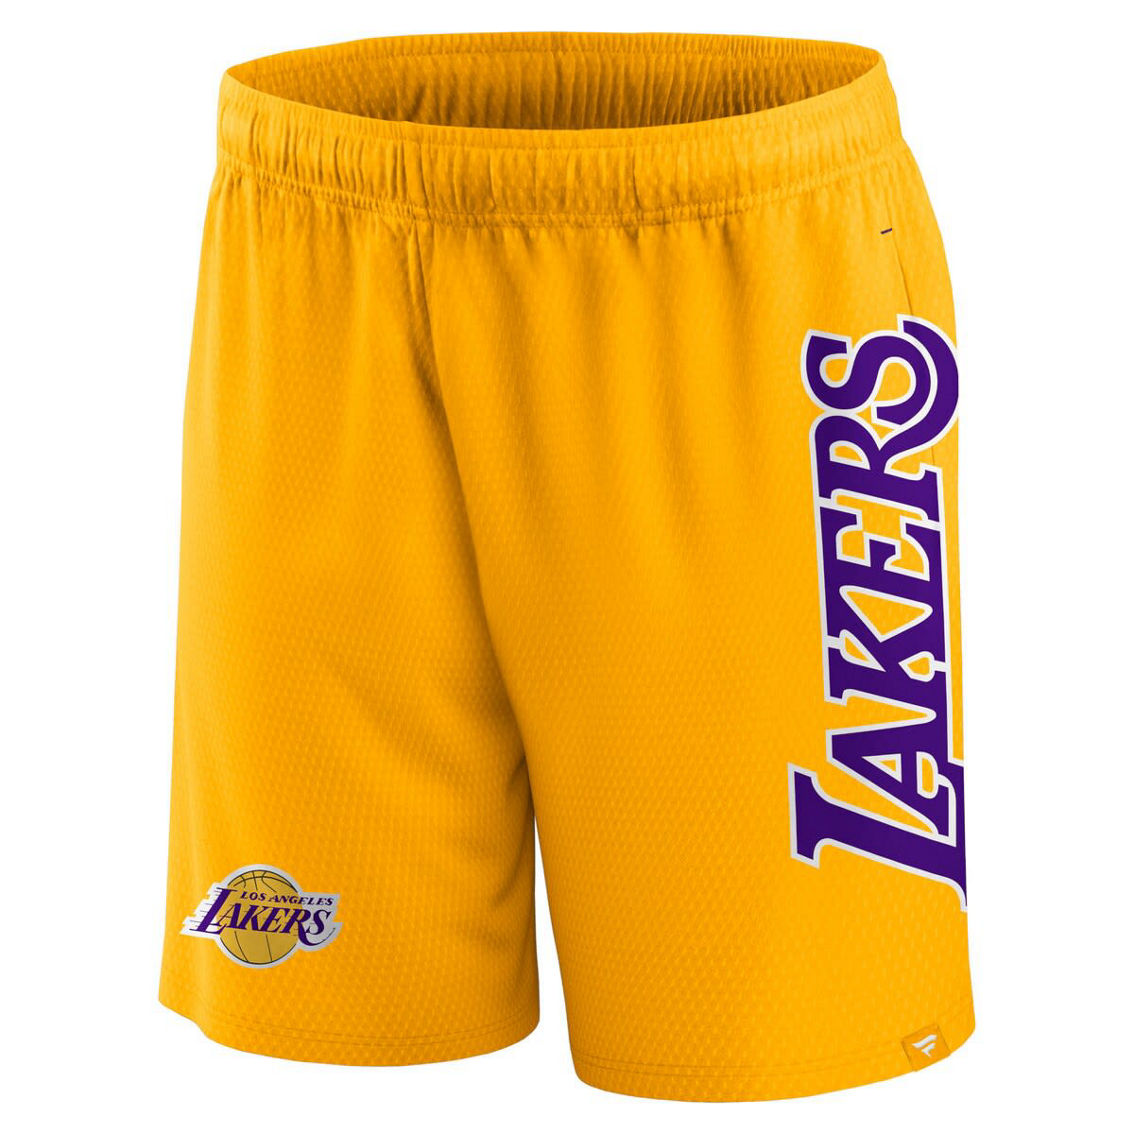 Fanatics Men's Fanatics Gold Los Angeles Lakers Up Mesh Shorts - Image 3 of 4